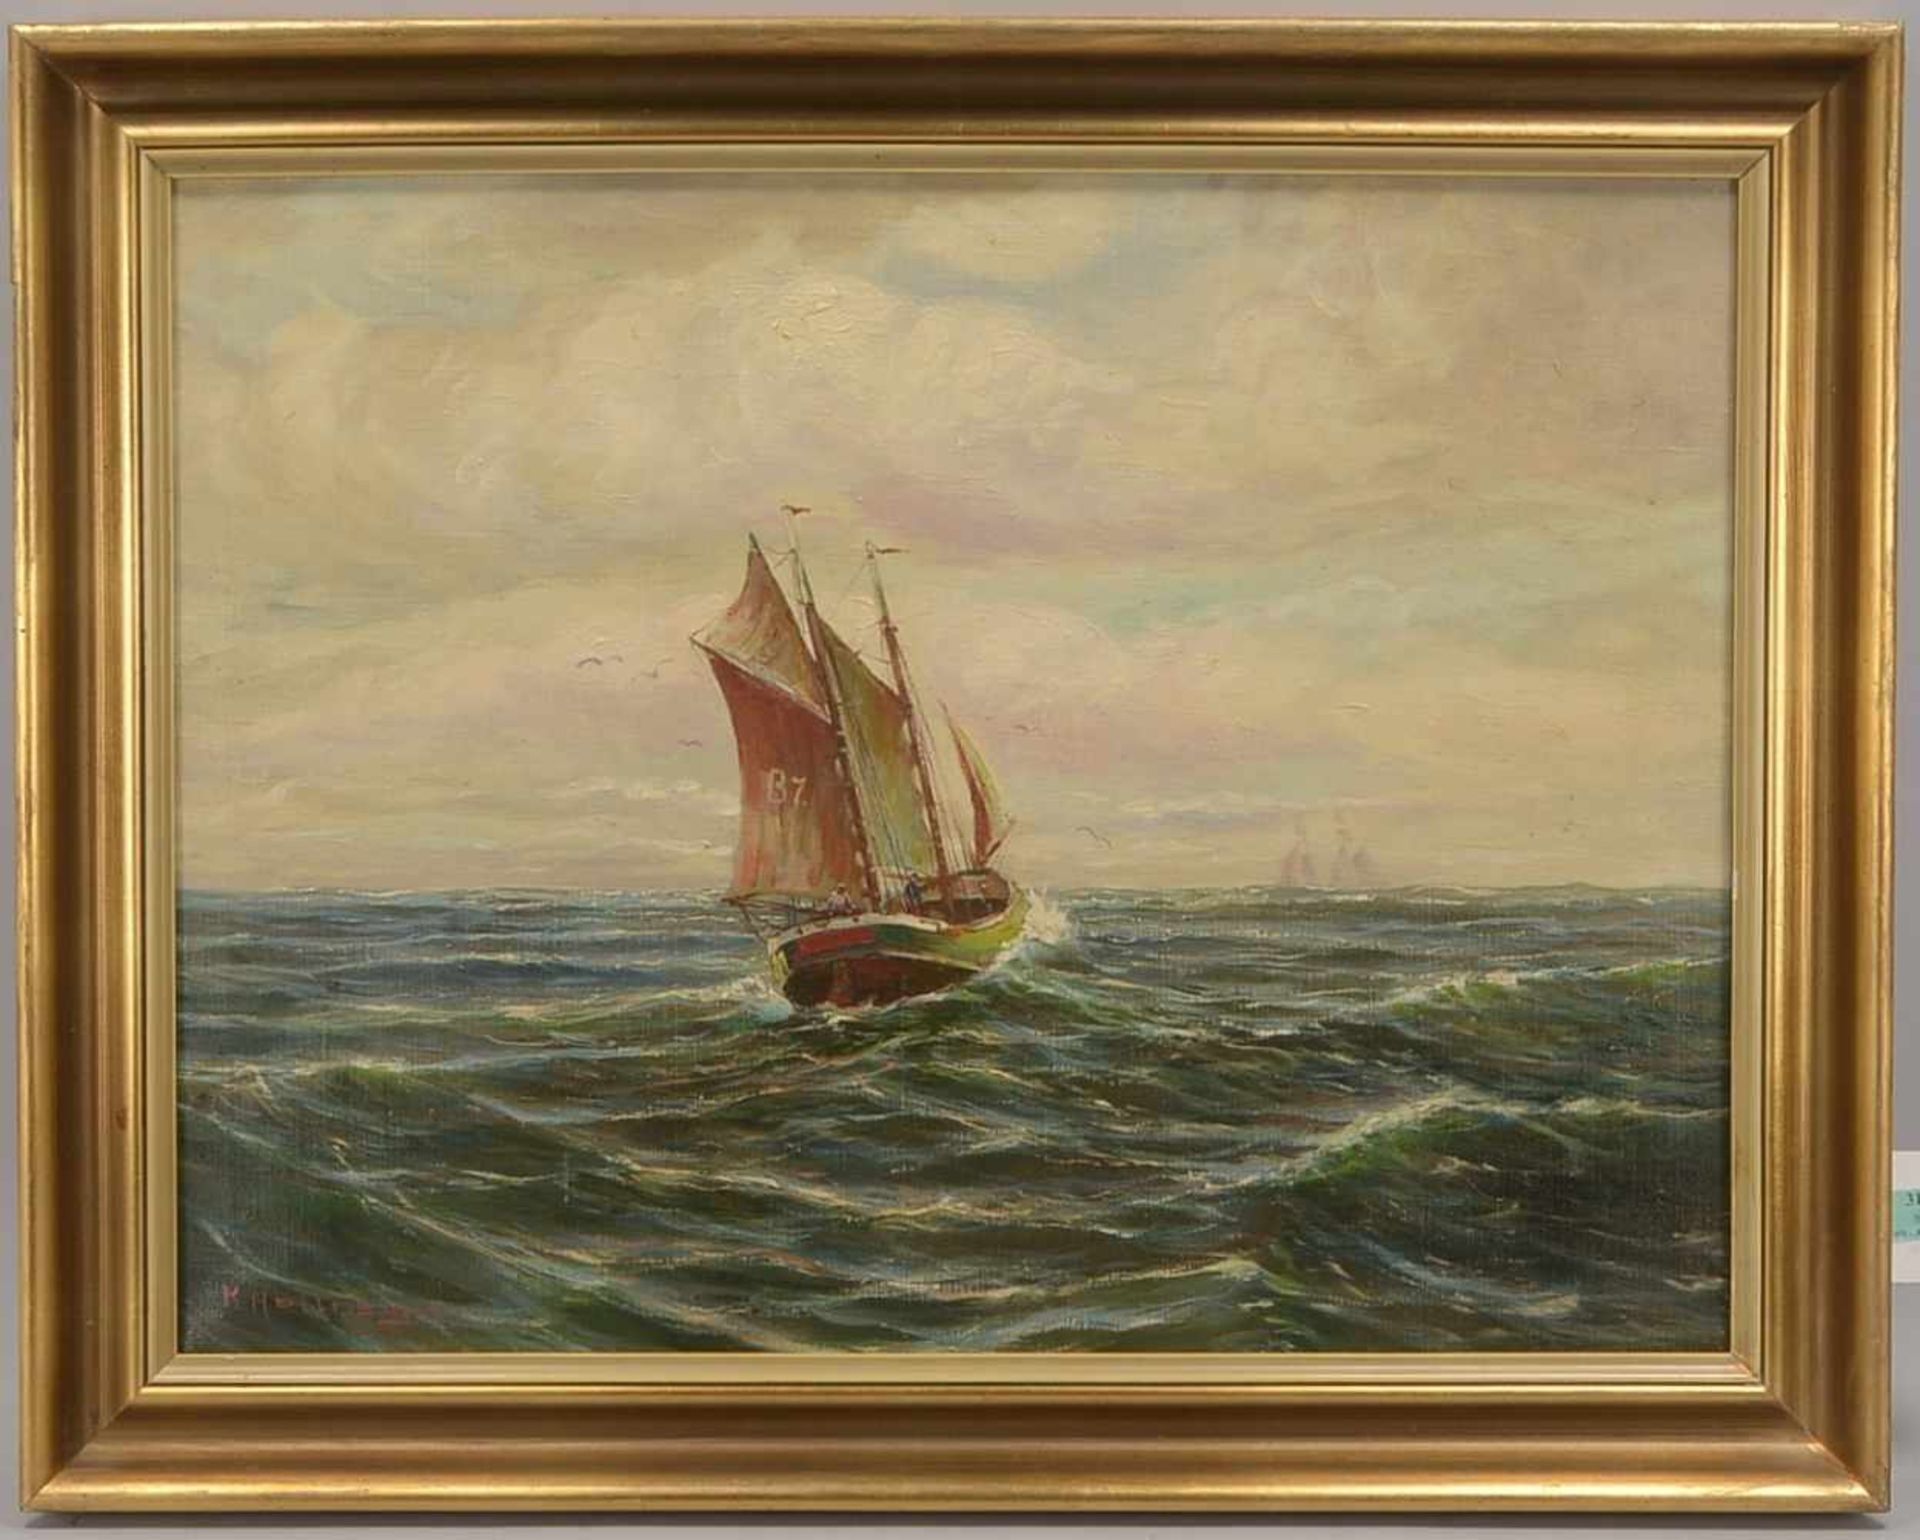 Hellnagel, K., Gemälde, 'Kutter B7 auf See', Öl/Lw, signiert; Bildmaße 50 x 65 cm, Rahmenmaße 60 x